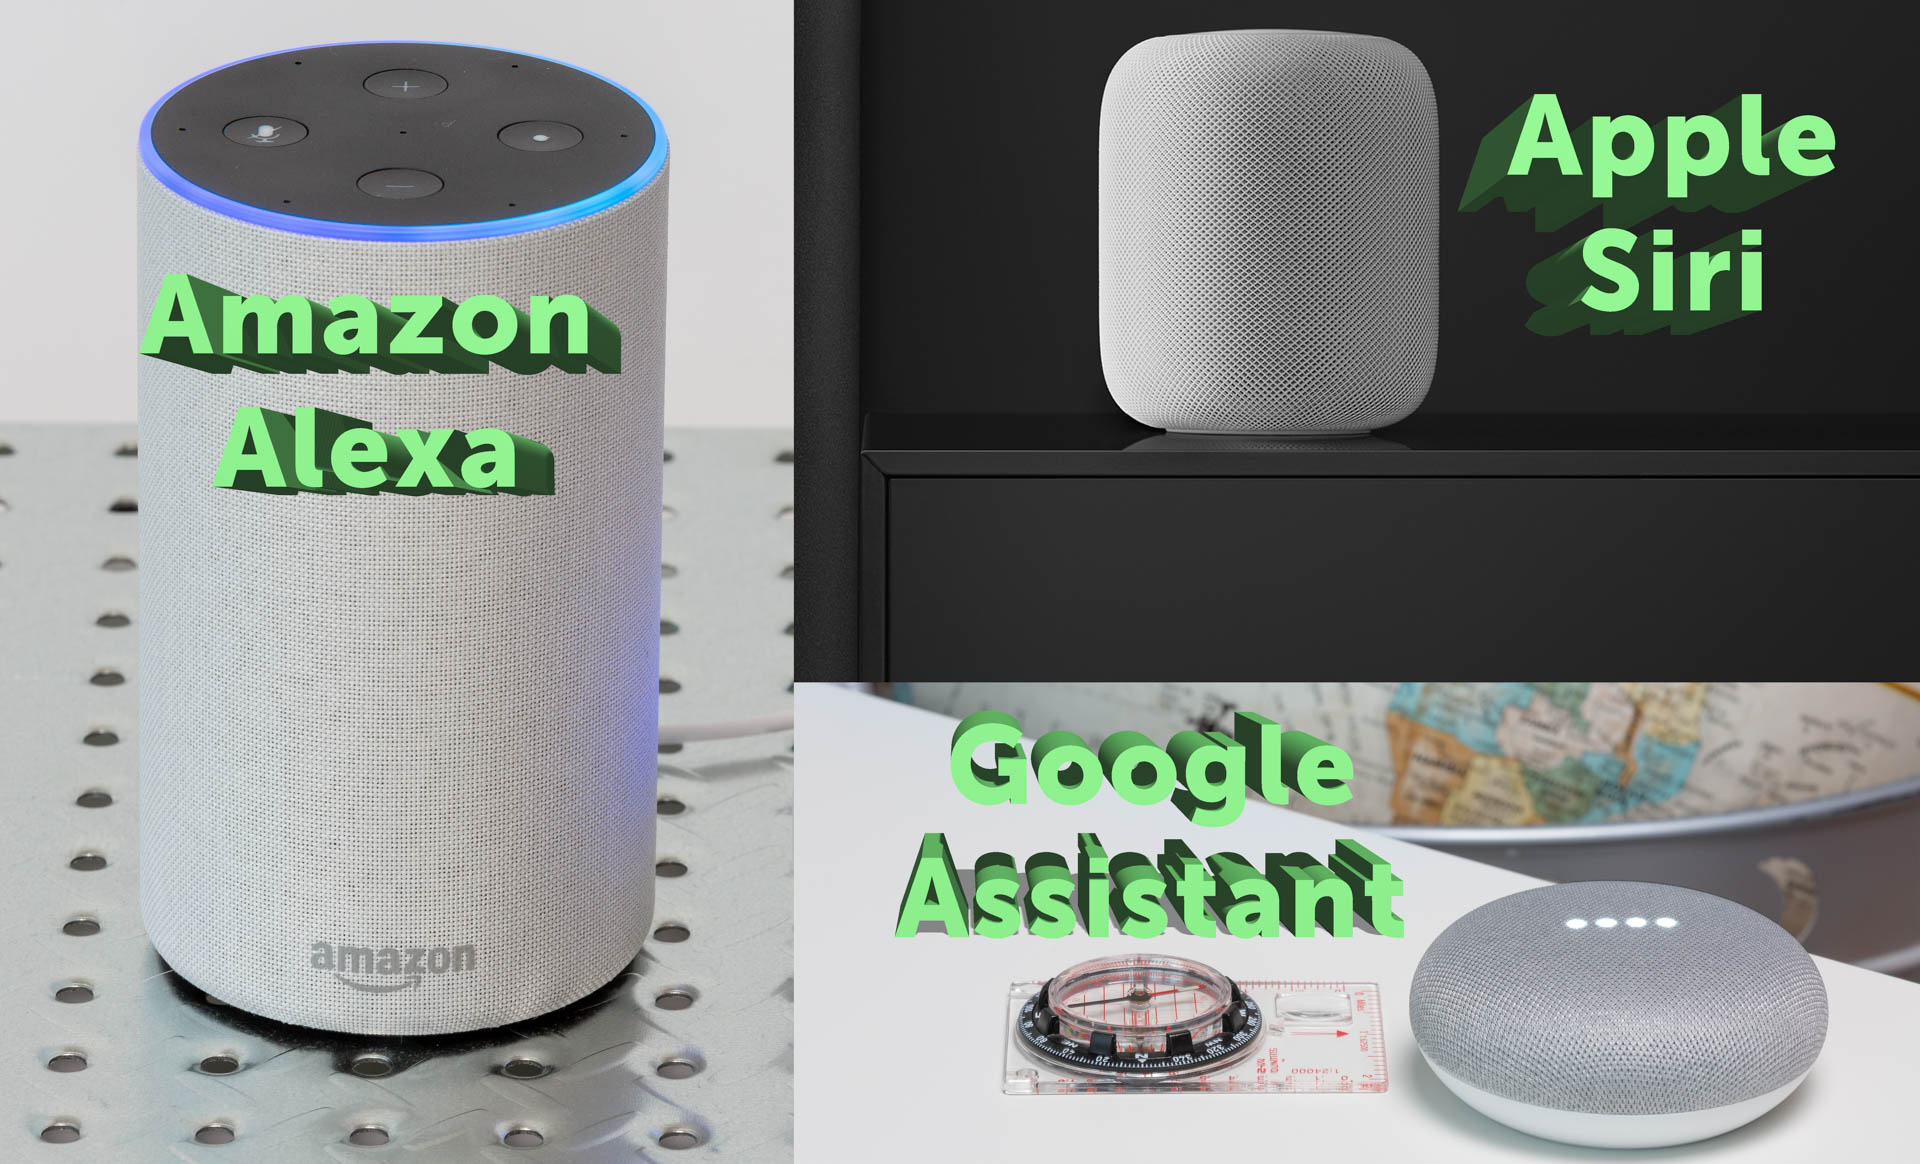 google home assistant compatible devices